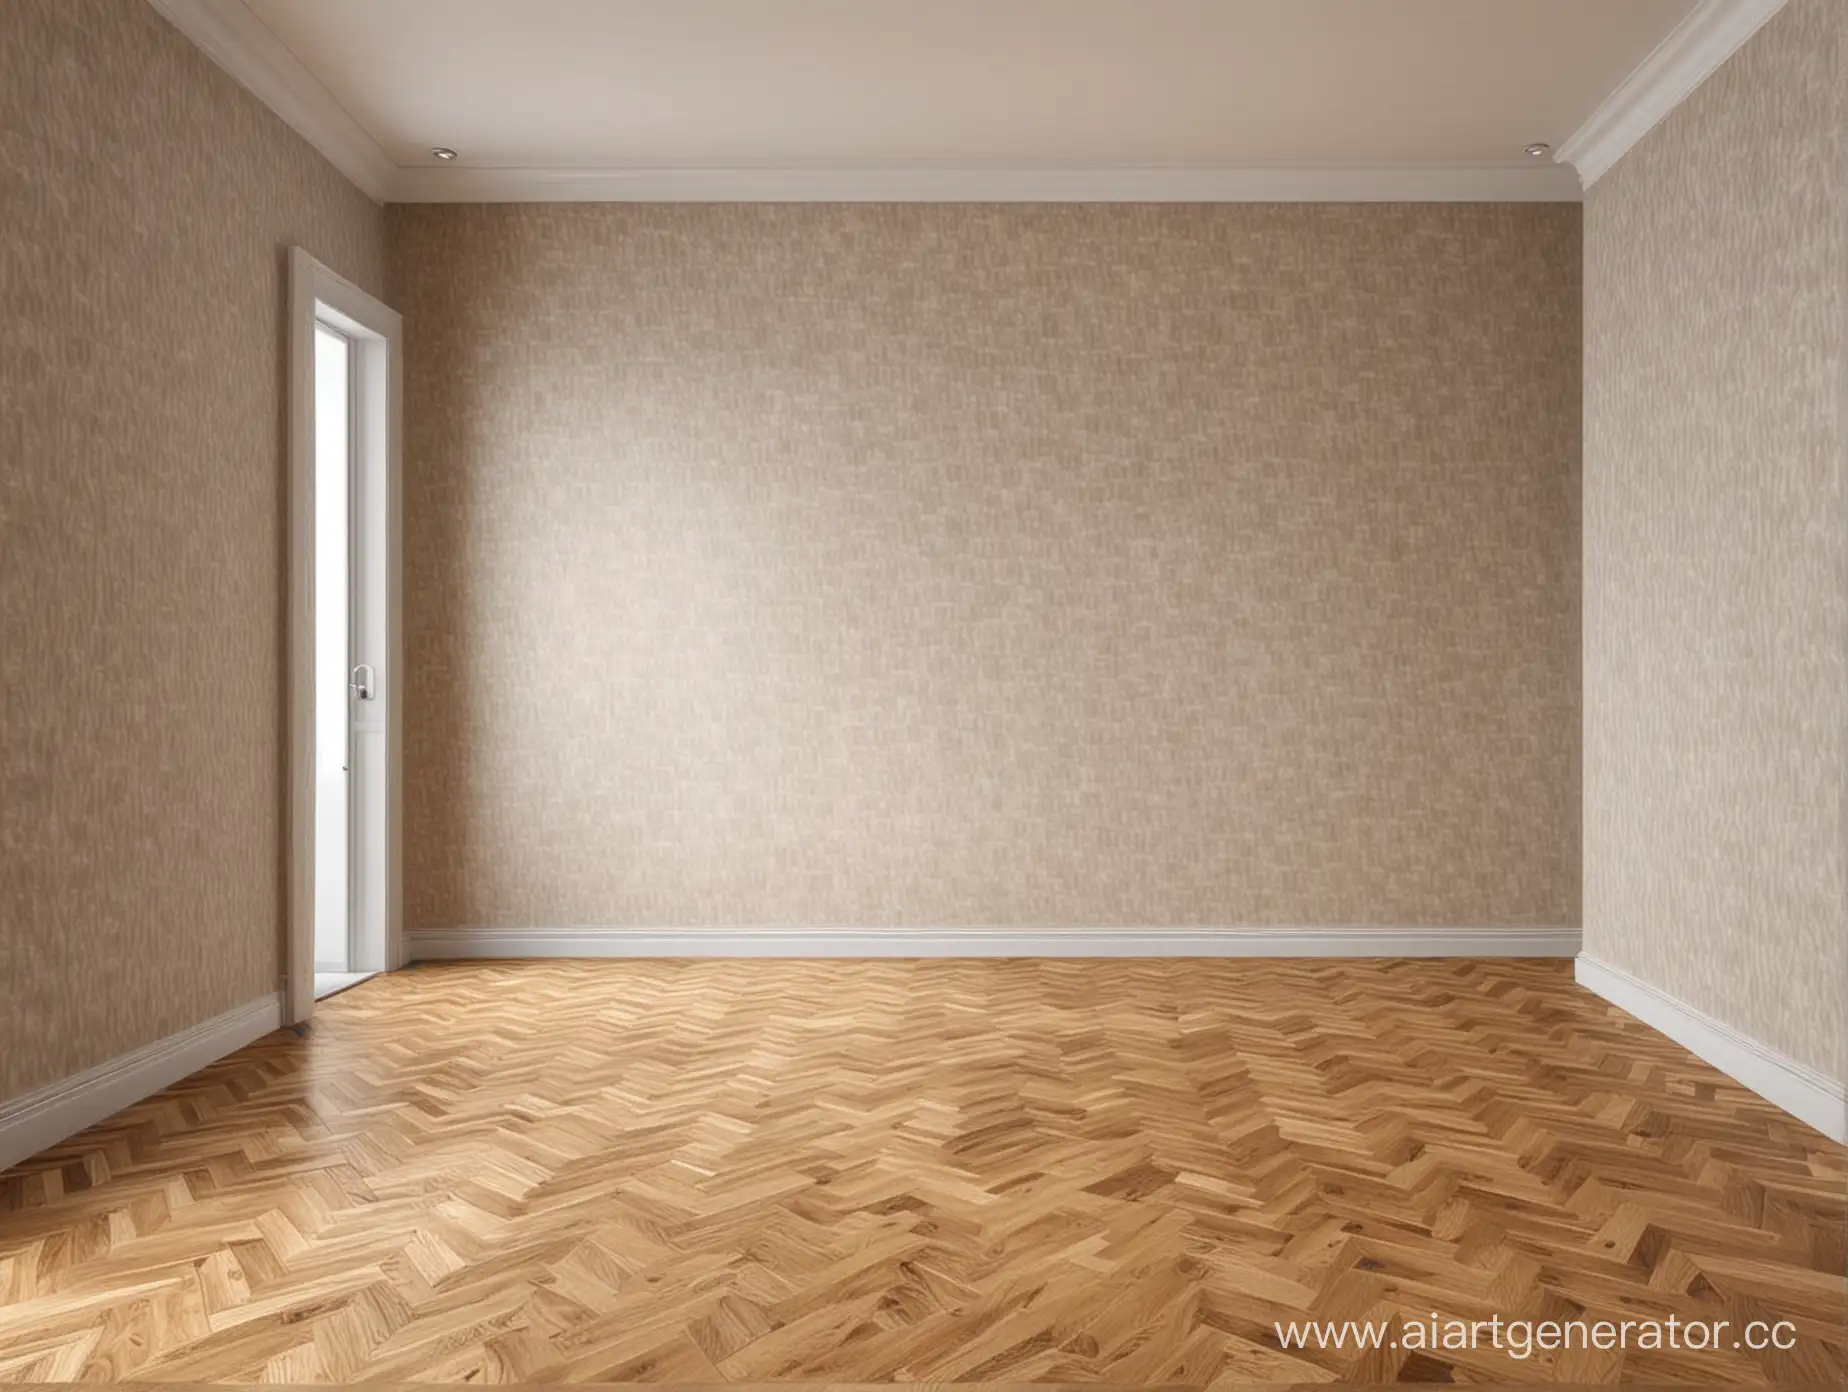 Realistic-Parquet-Flooring-and-Wallpaper-in-Apartment-Interior